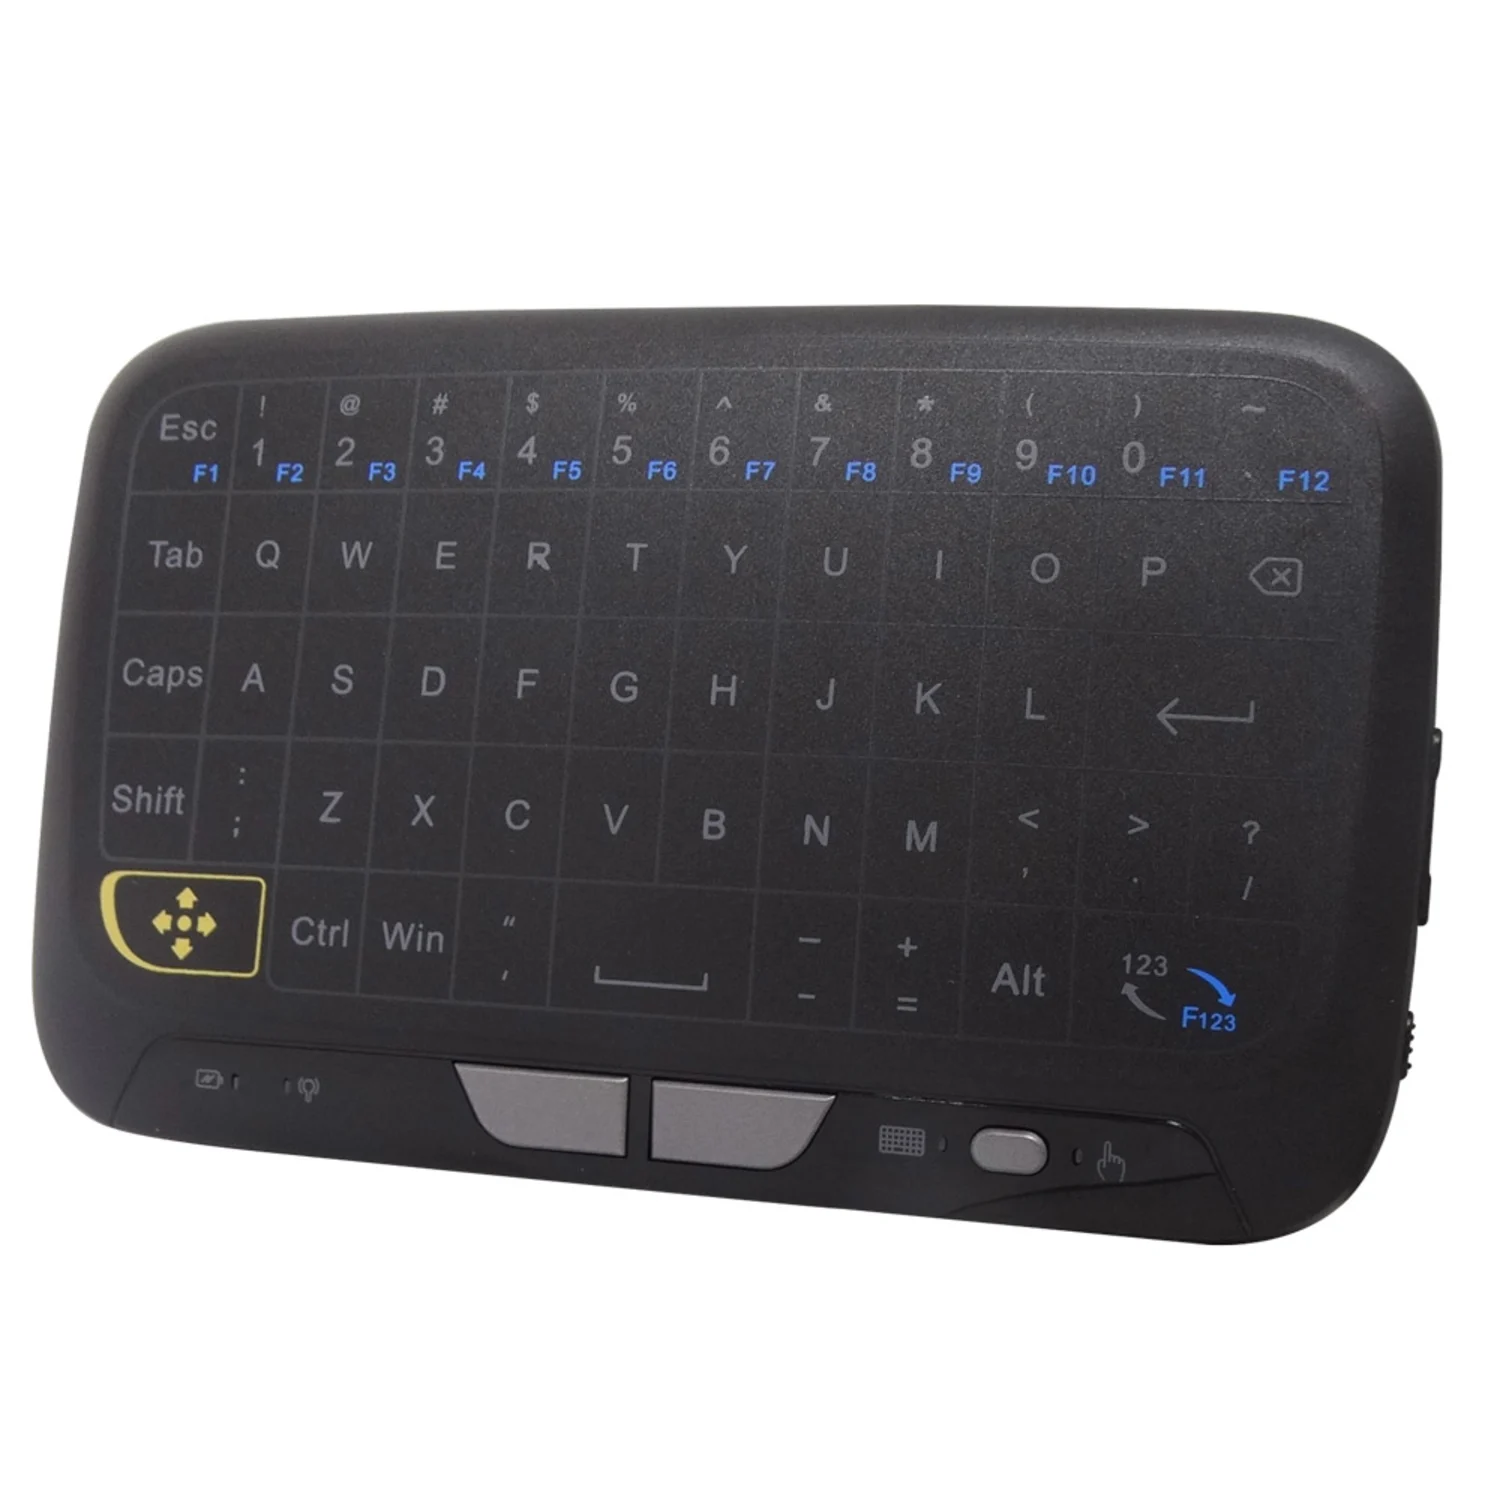 Controle para receptor Smart Remote Mini Wireless Keyboard Touchpad H18 - Preto